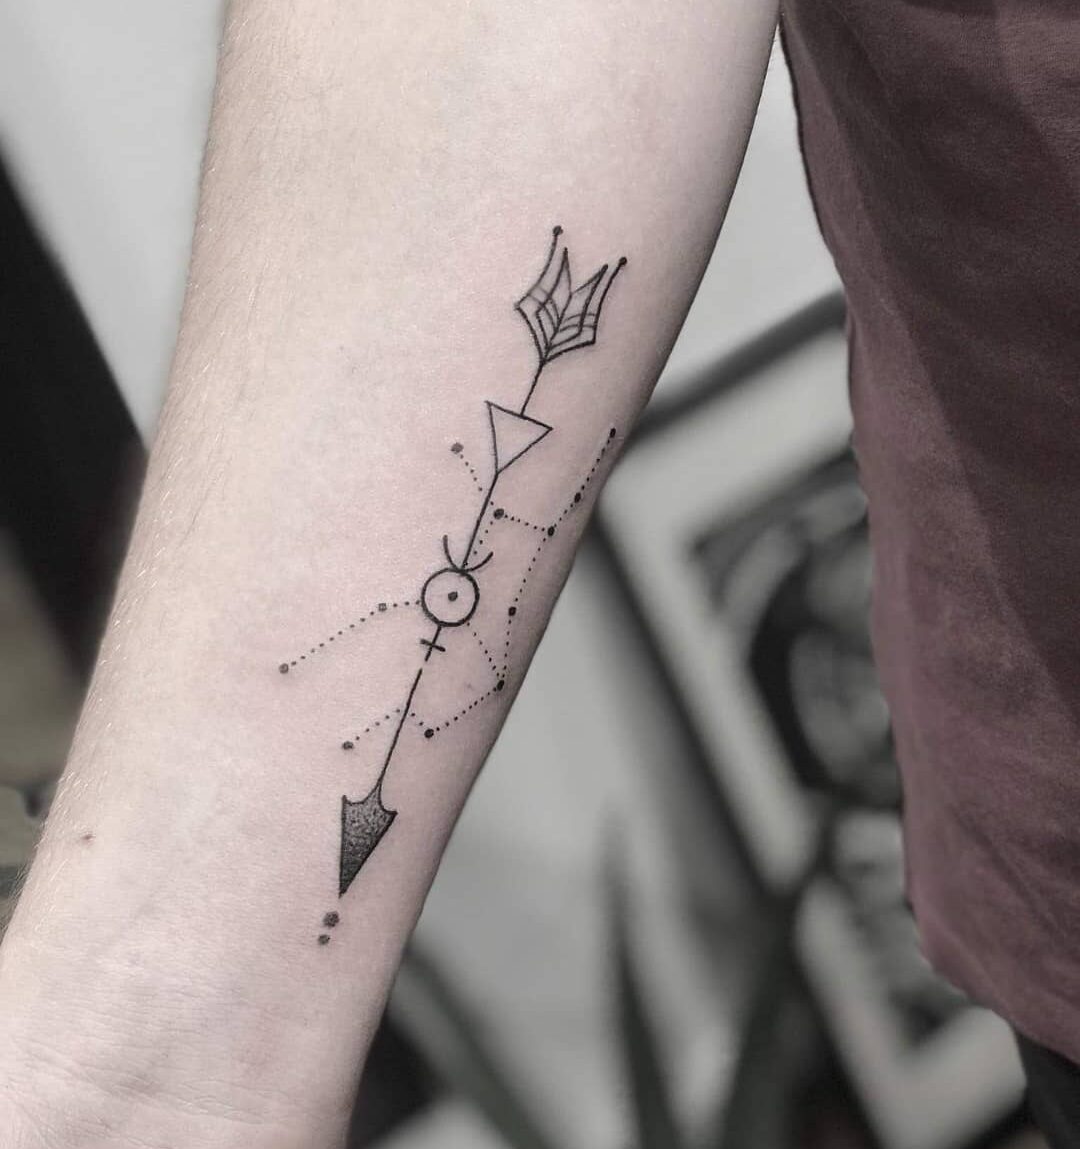 Virgo constellation and tribal arrow tattoo on the inner forearm